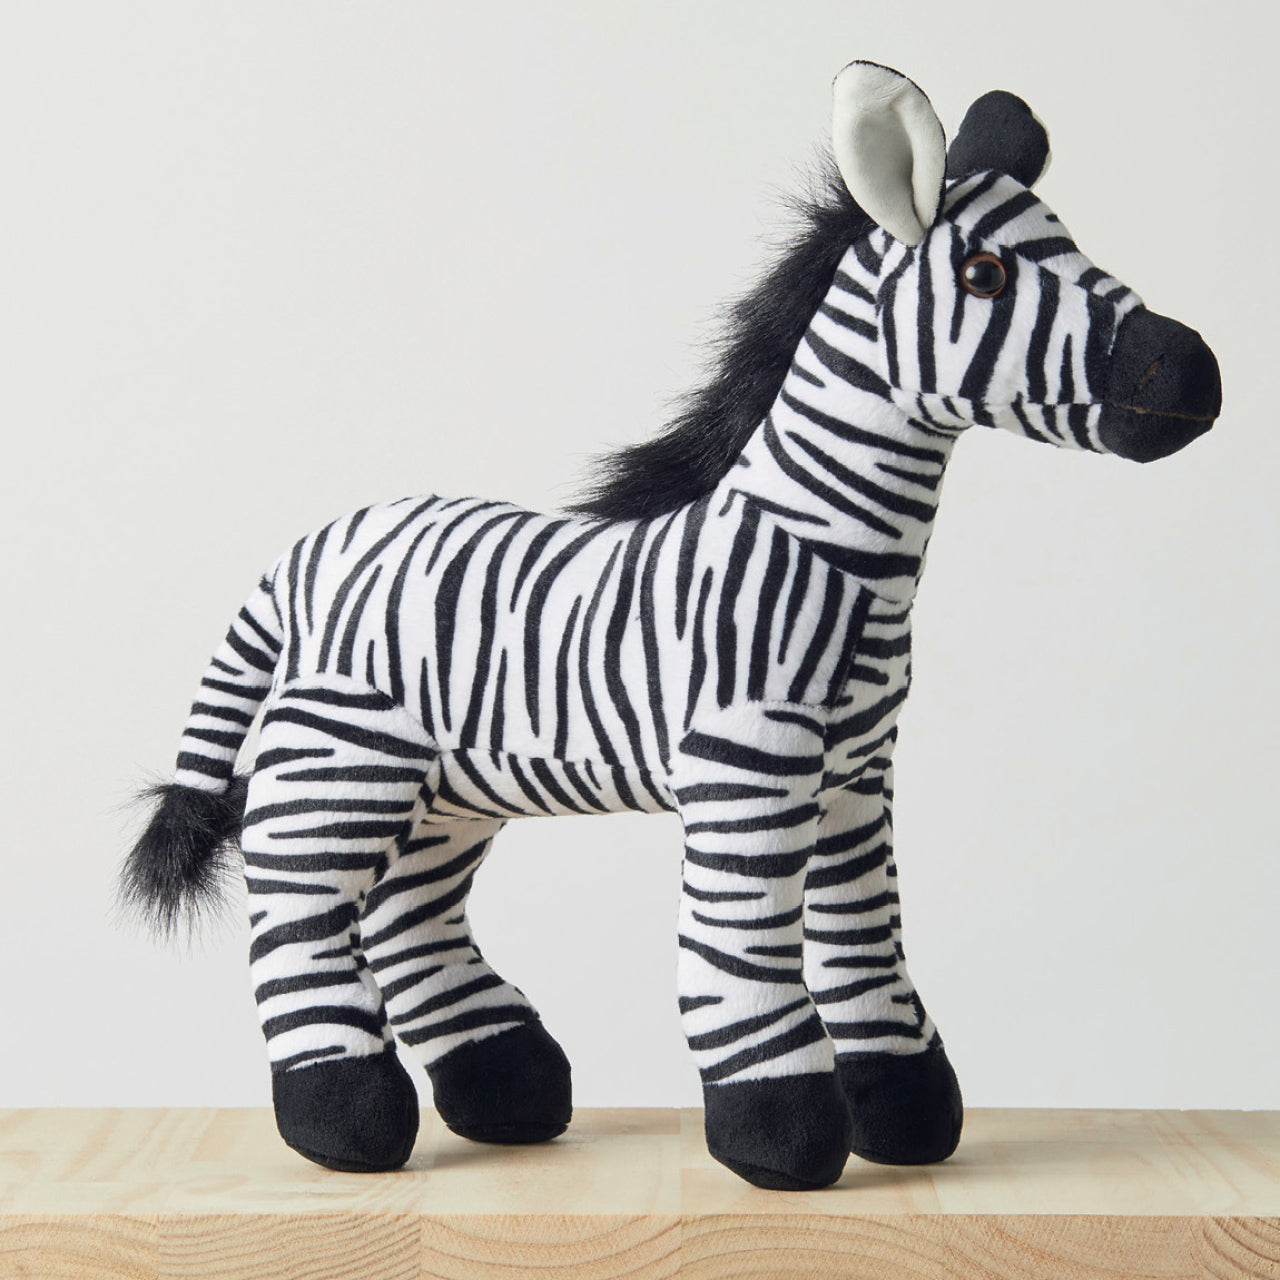 Zebra Soft Toy standing up on floor